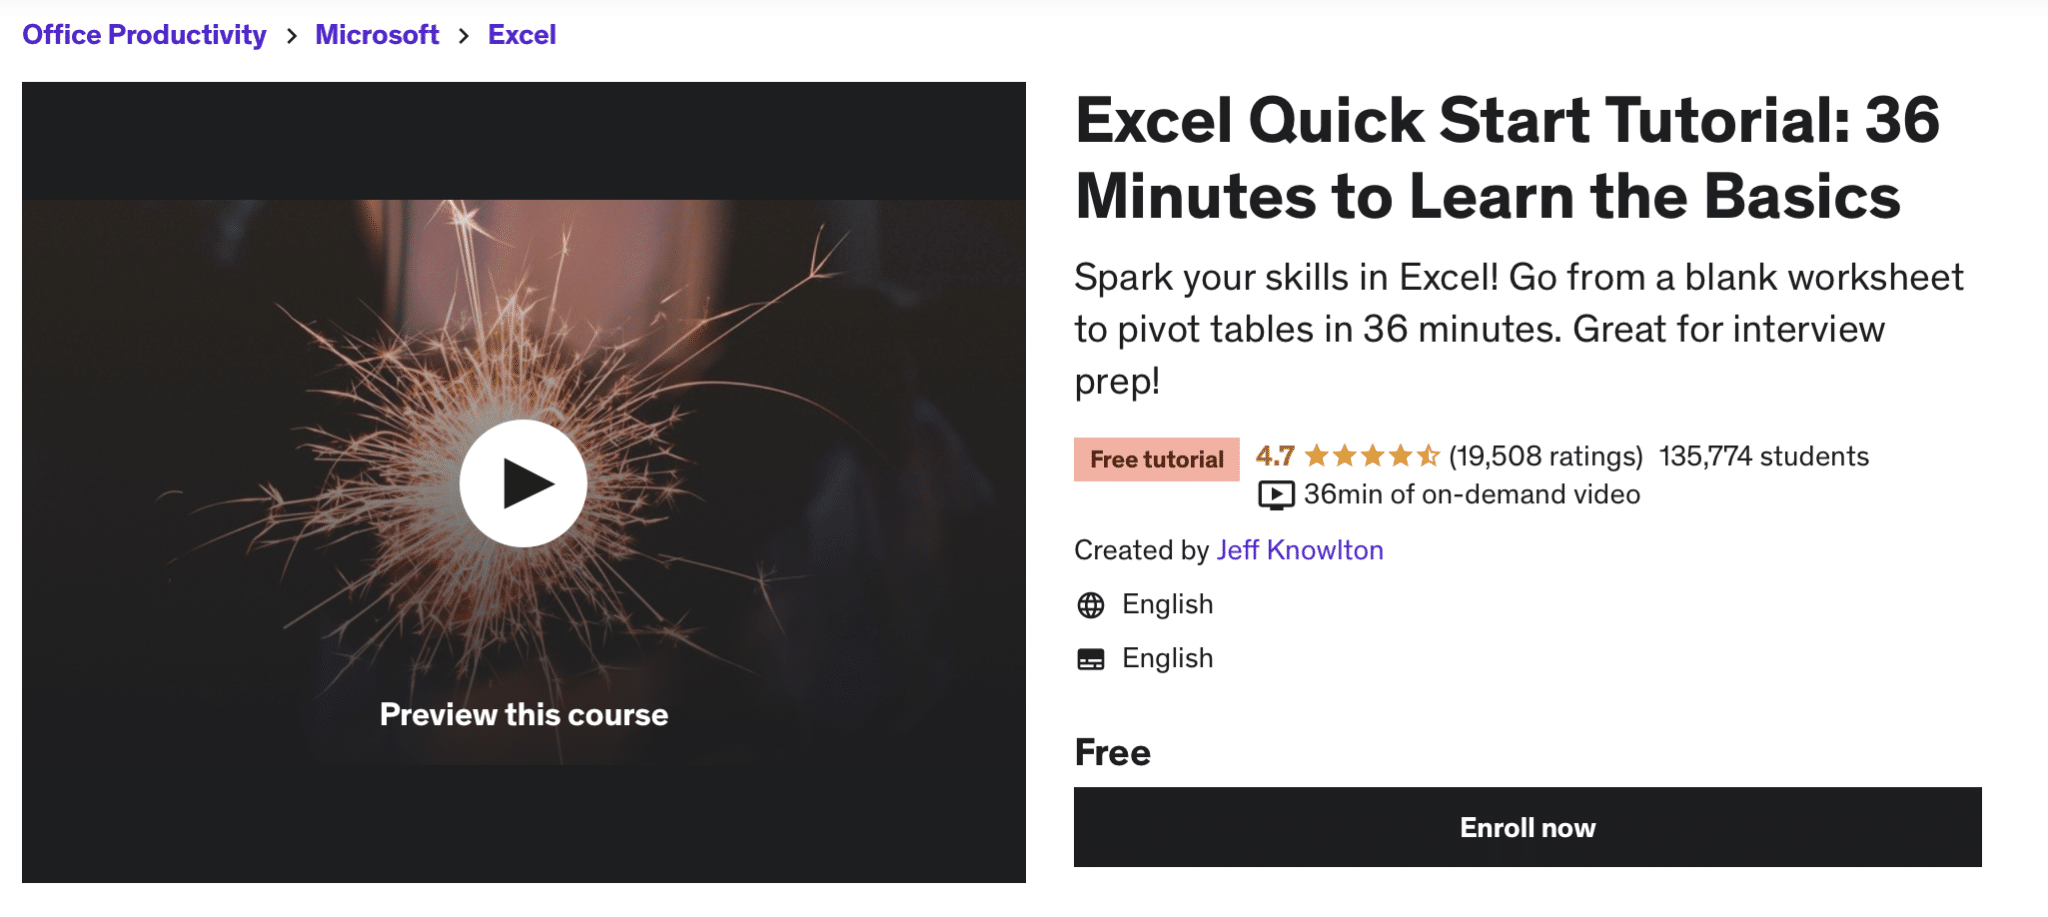 Excel Quick Start Tutorial